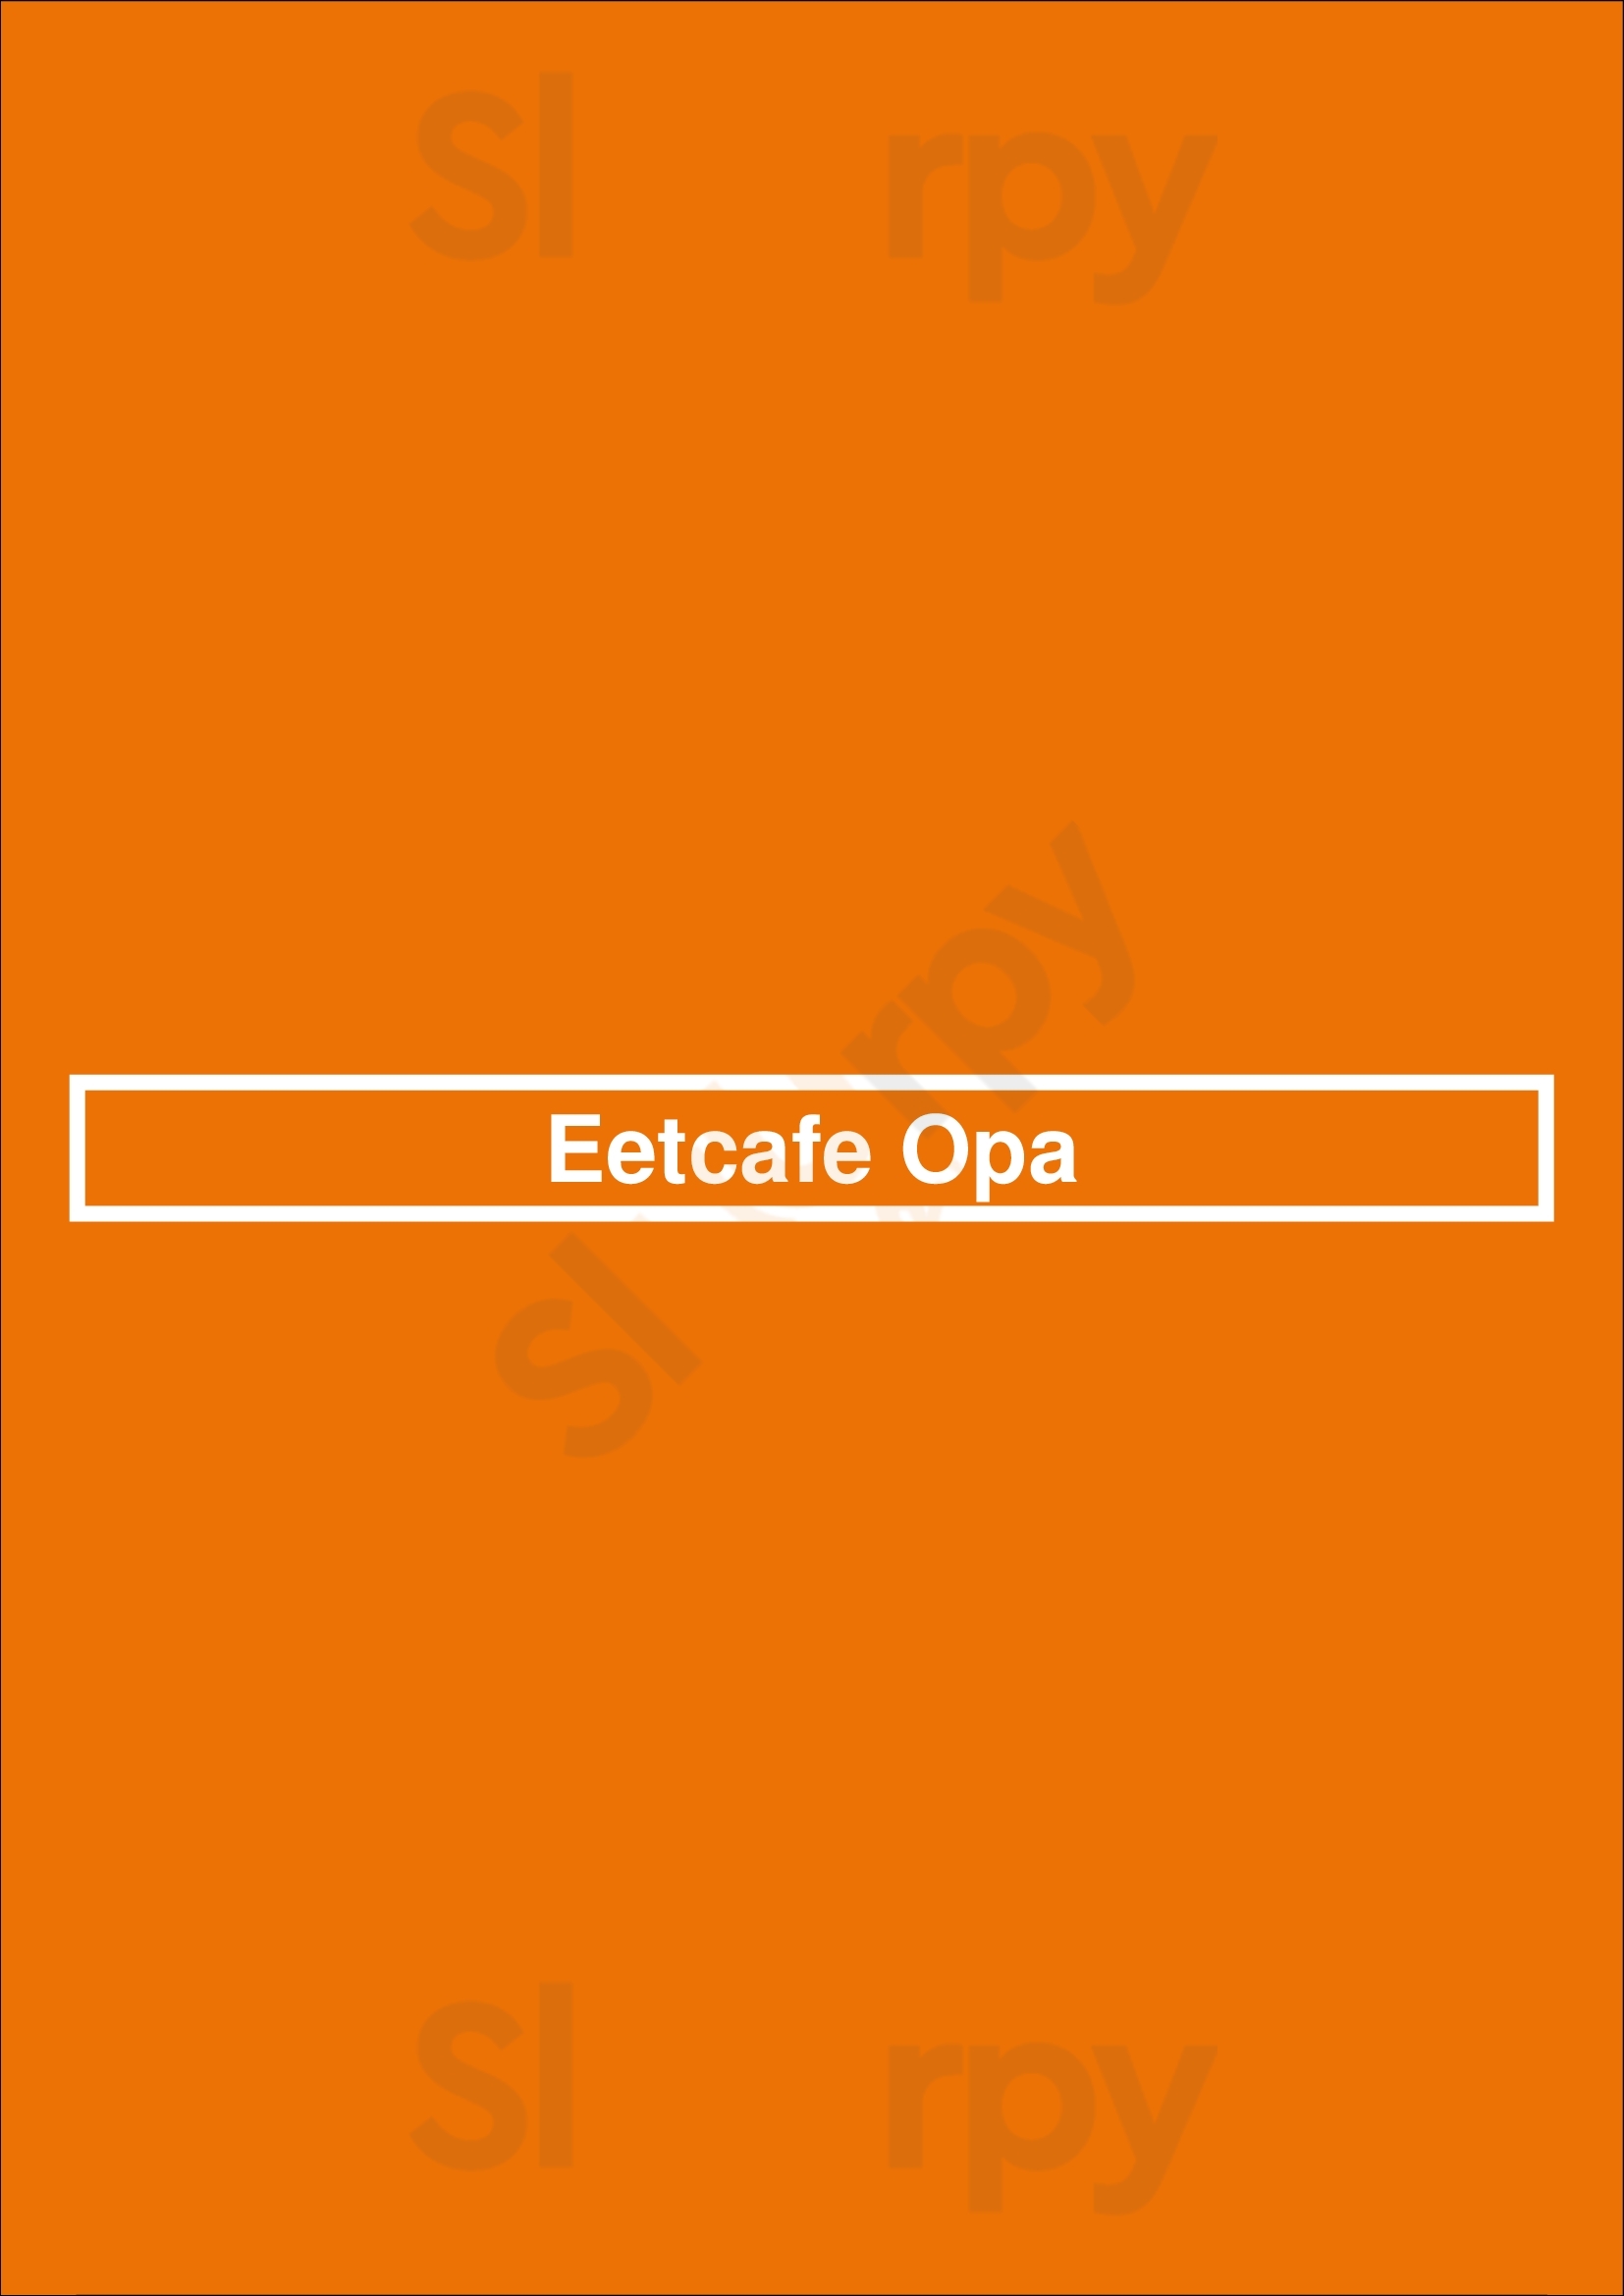 Eetcafe Opa Rotterdam Menu - 1